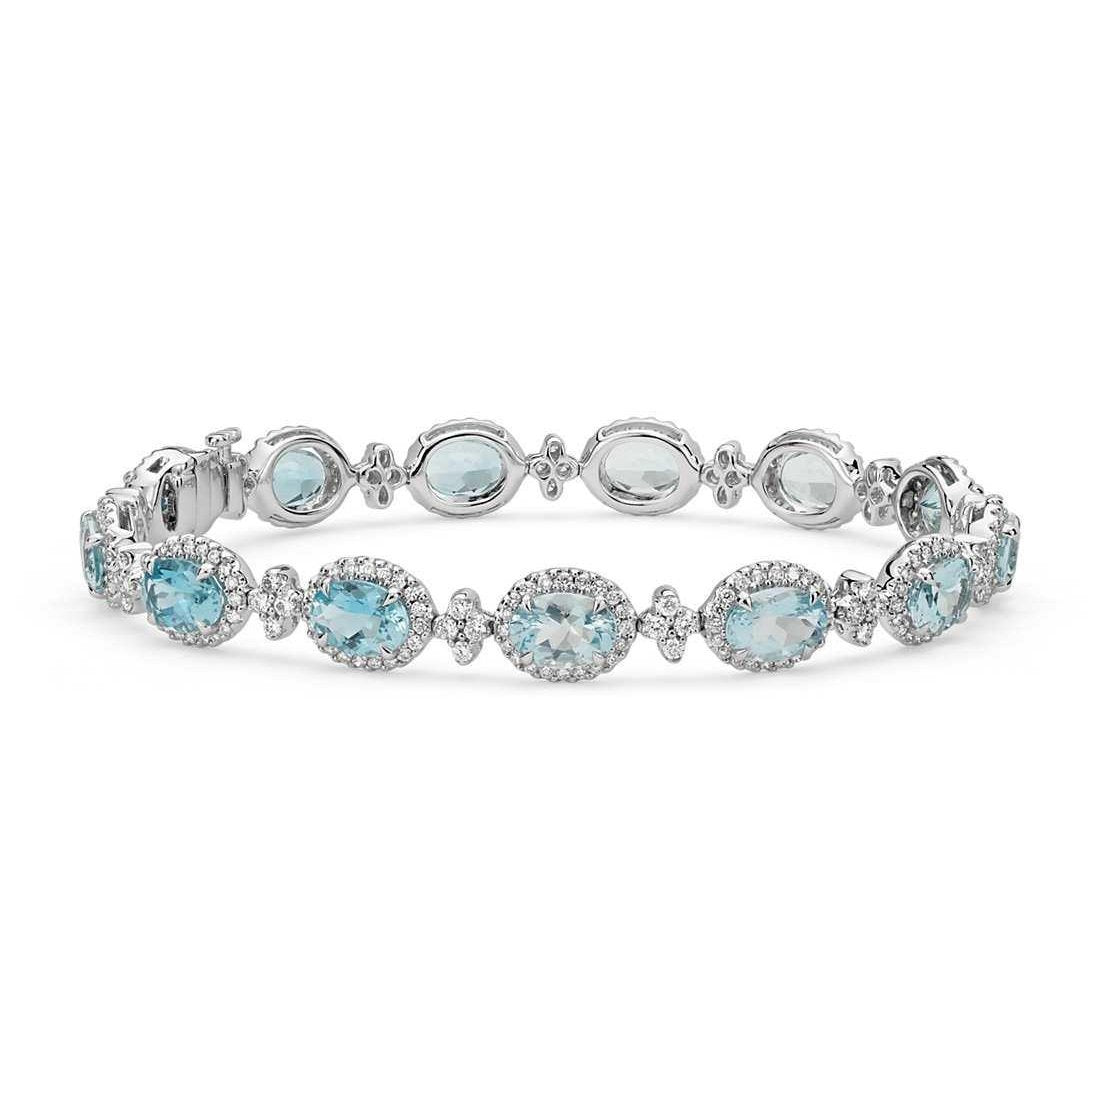 Bracelet Dame Aigue-marine Et Diamants 40.25 Carats Or Blanc 14K - HarryChadEnt.FR